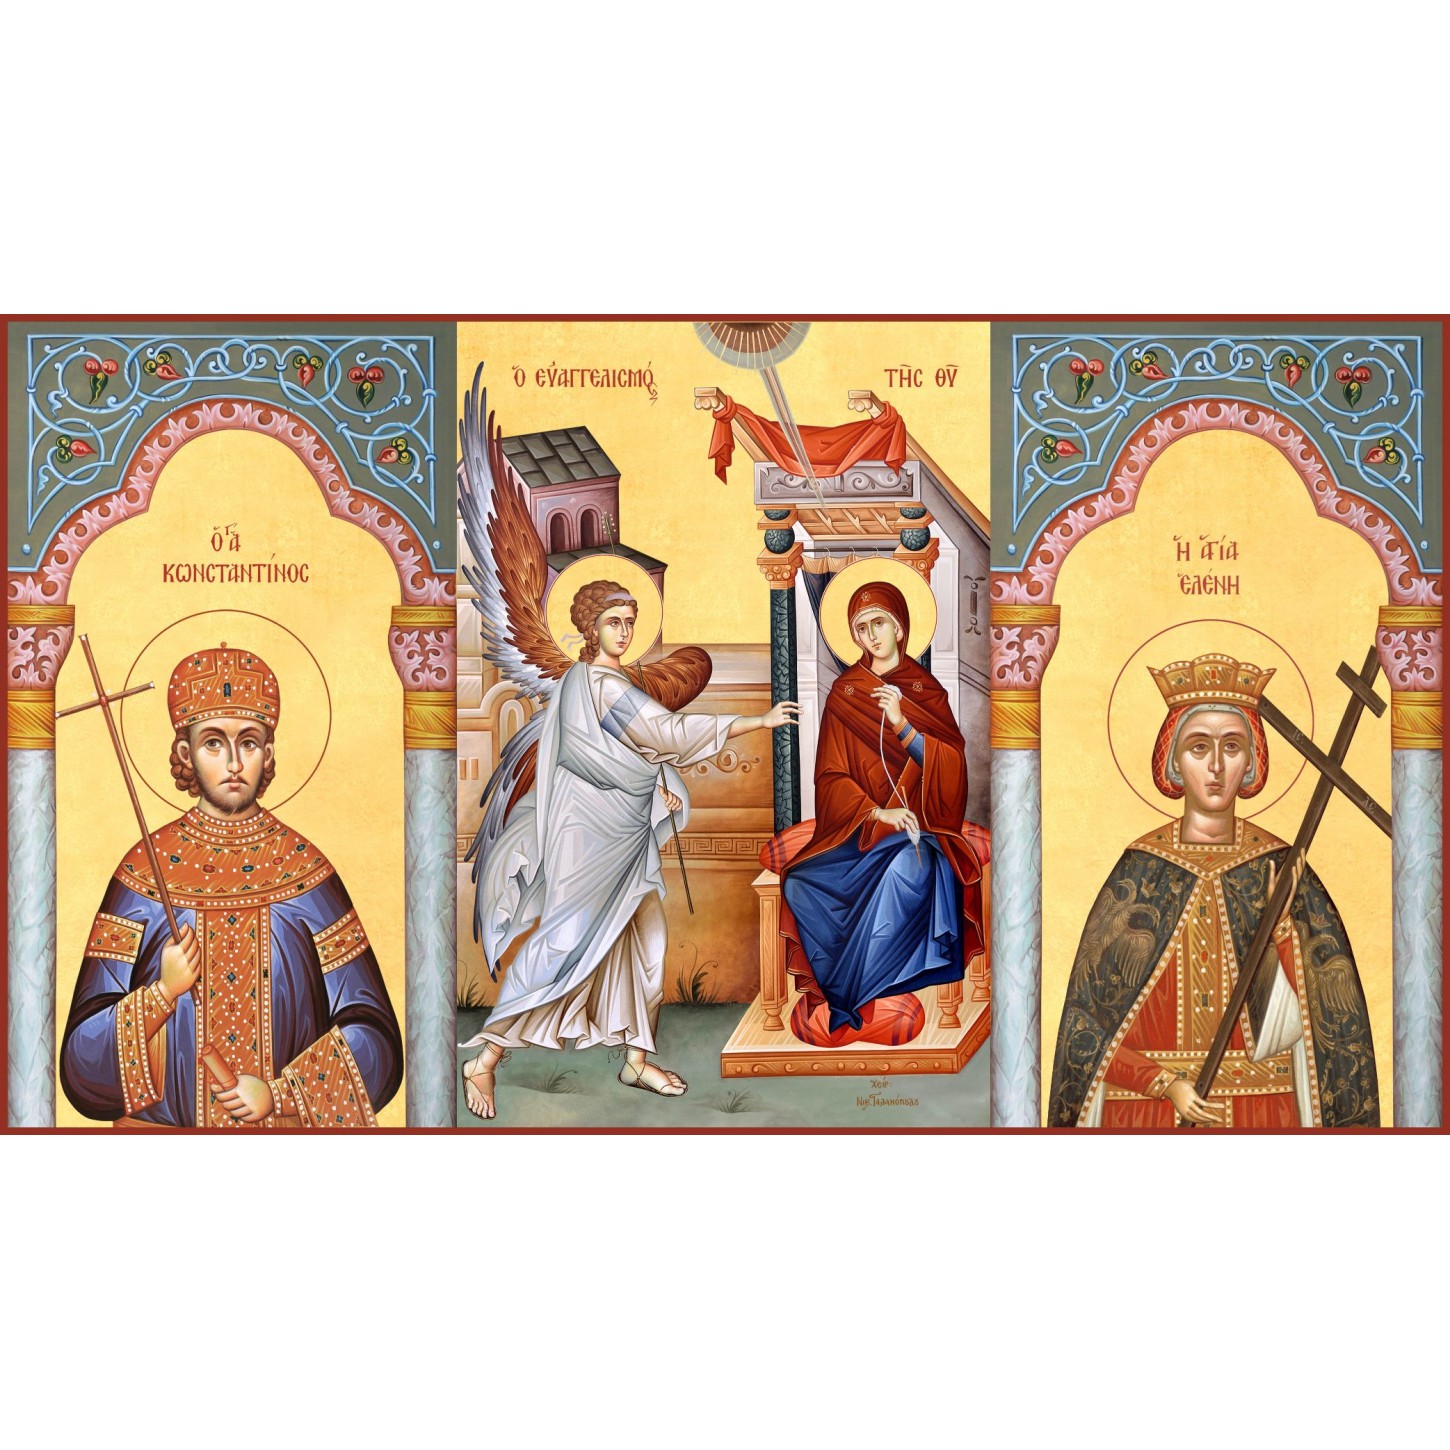 Evangelismos - St. Konstantinos - St. Heleni